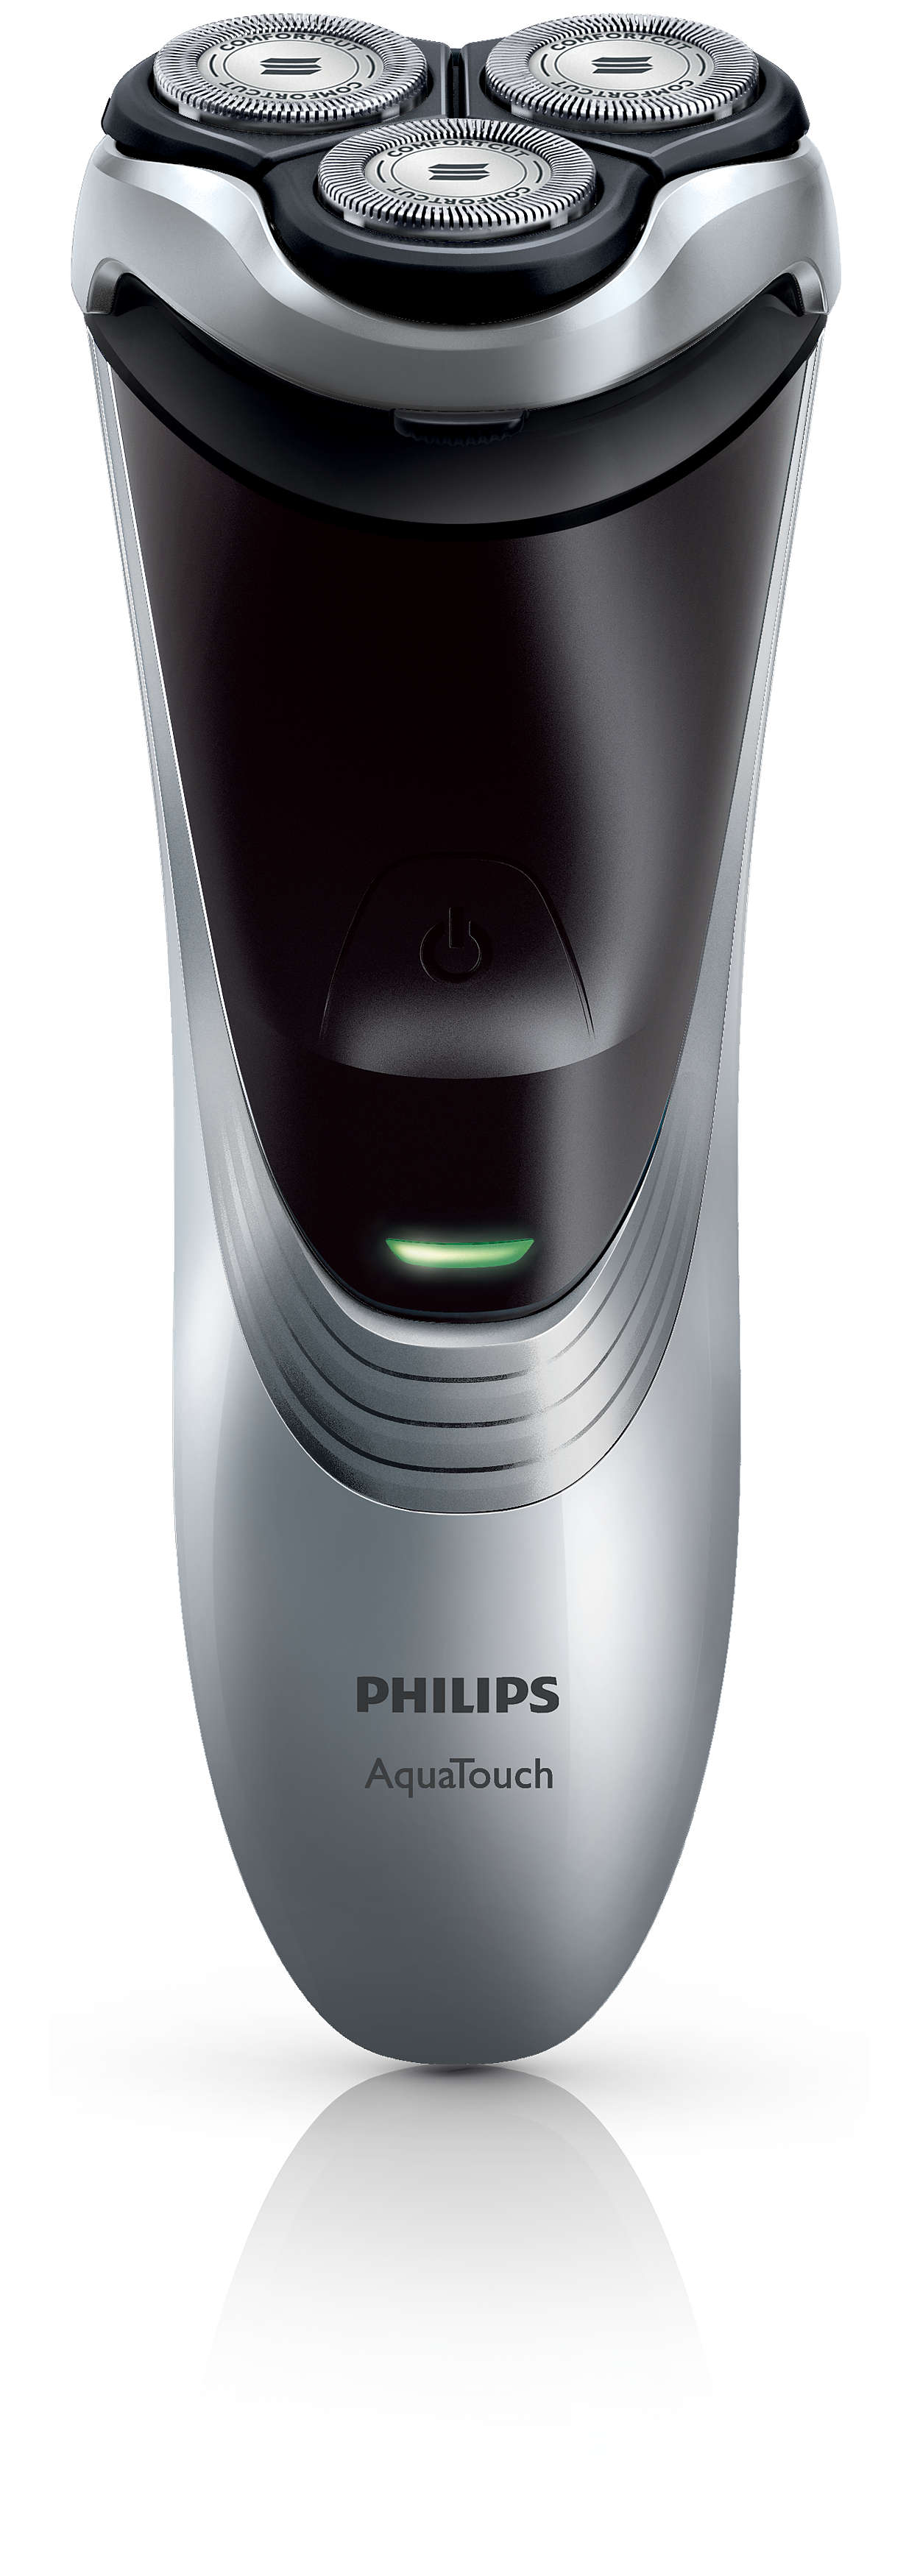 Роторная филипс. Philips pt860 POWERTOUCH. Бритва роторная pt7111/16 Филипс. Philips Classics pt860. Philips pt 925.